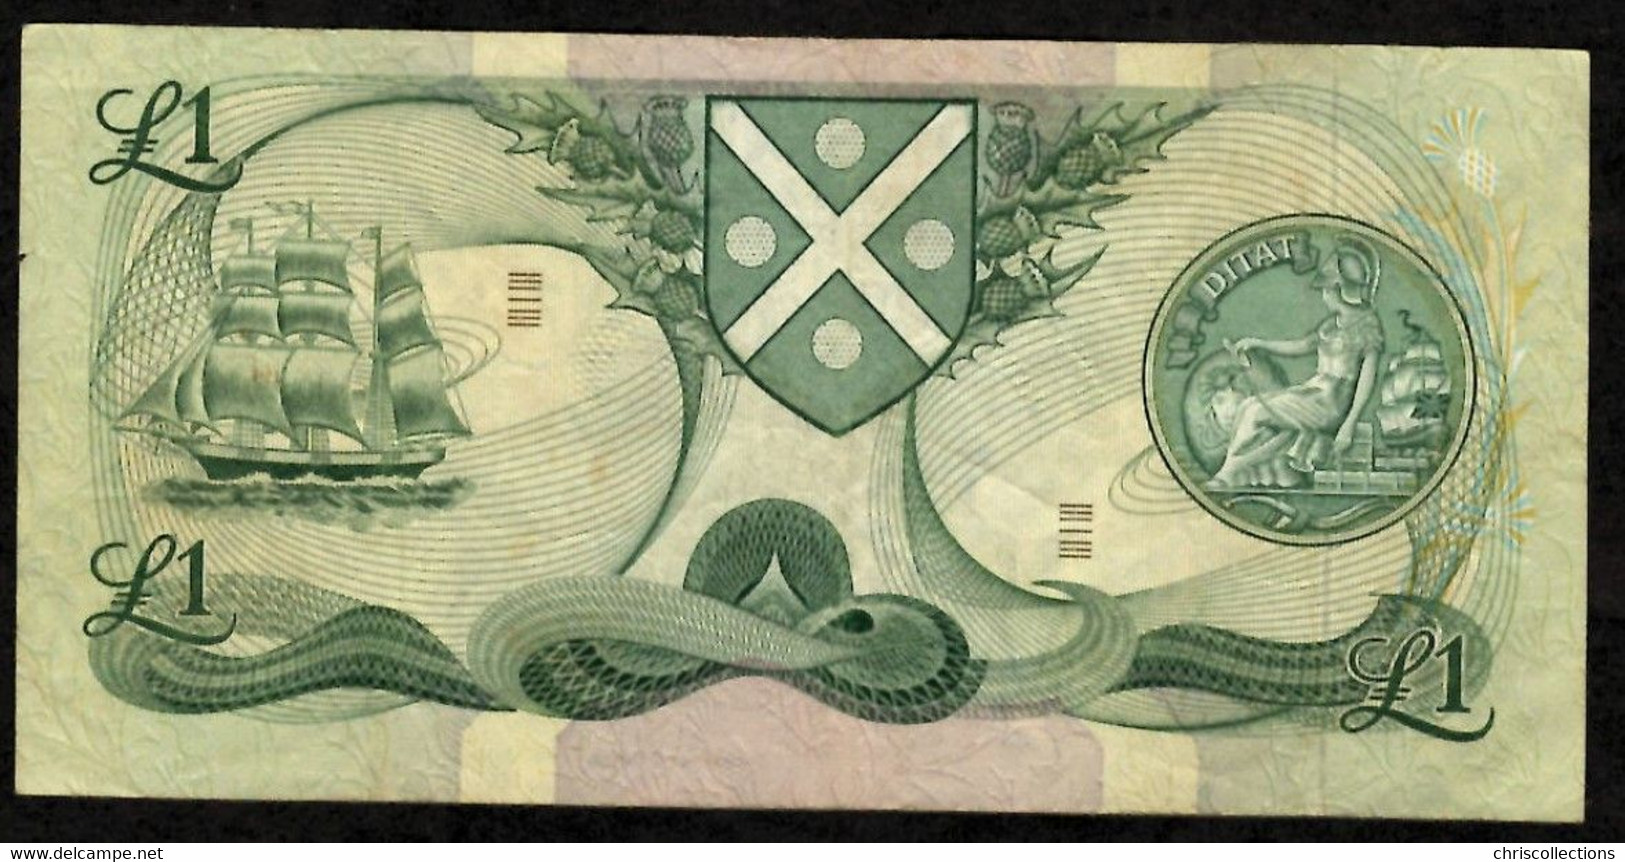 ECOSSE - 1 Pound Bank Of Scotland - 1977 - Pick 204 - 1 Pound